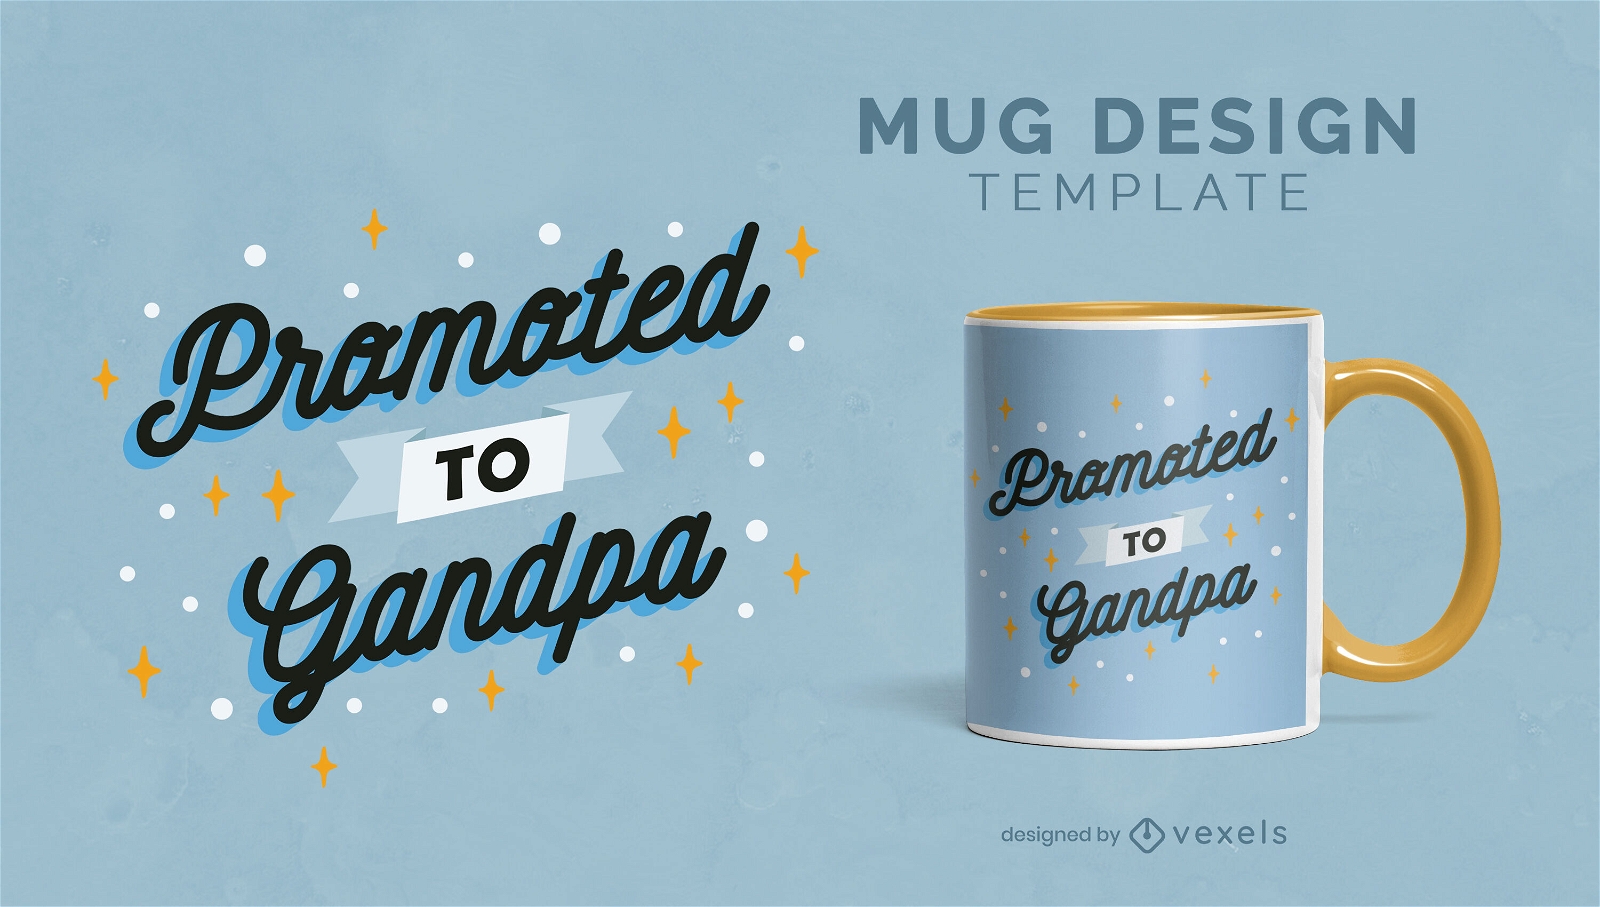 Promoted to grandpa quote mug design